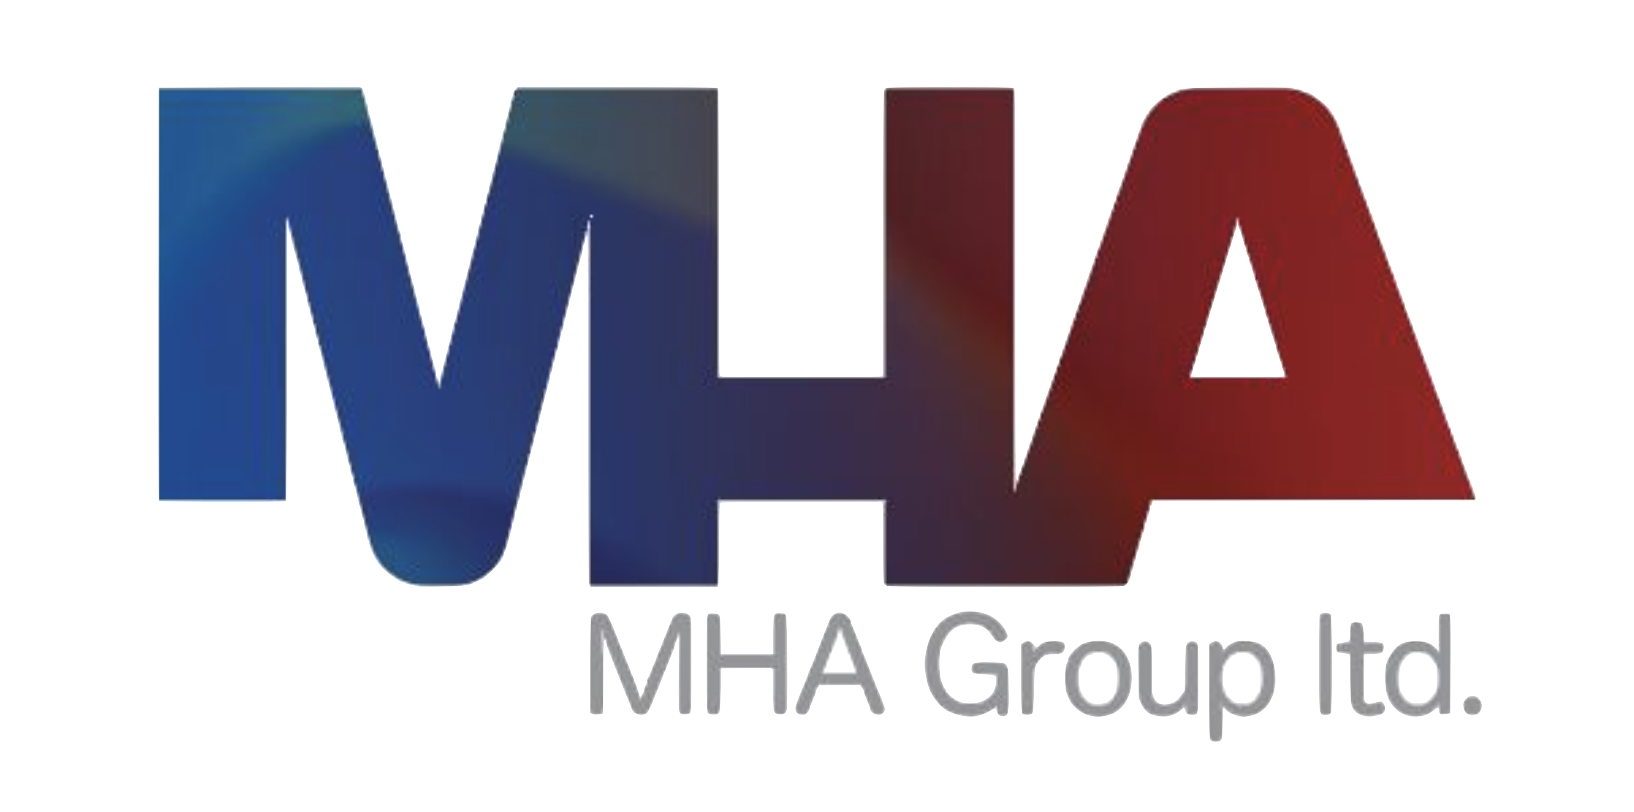 MHA Group Ltd.